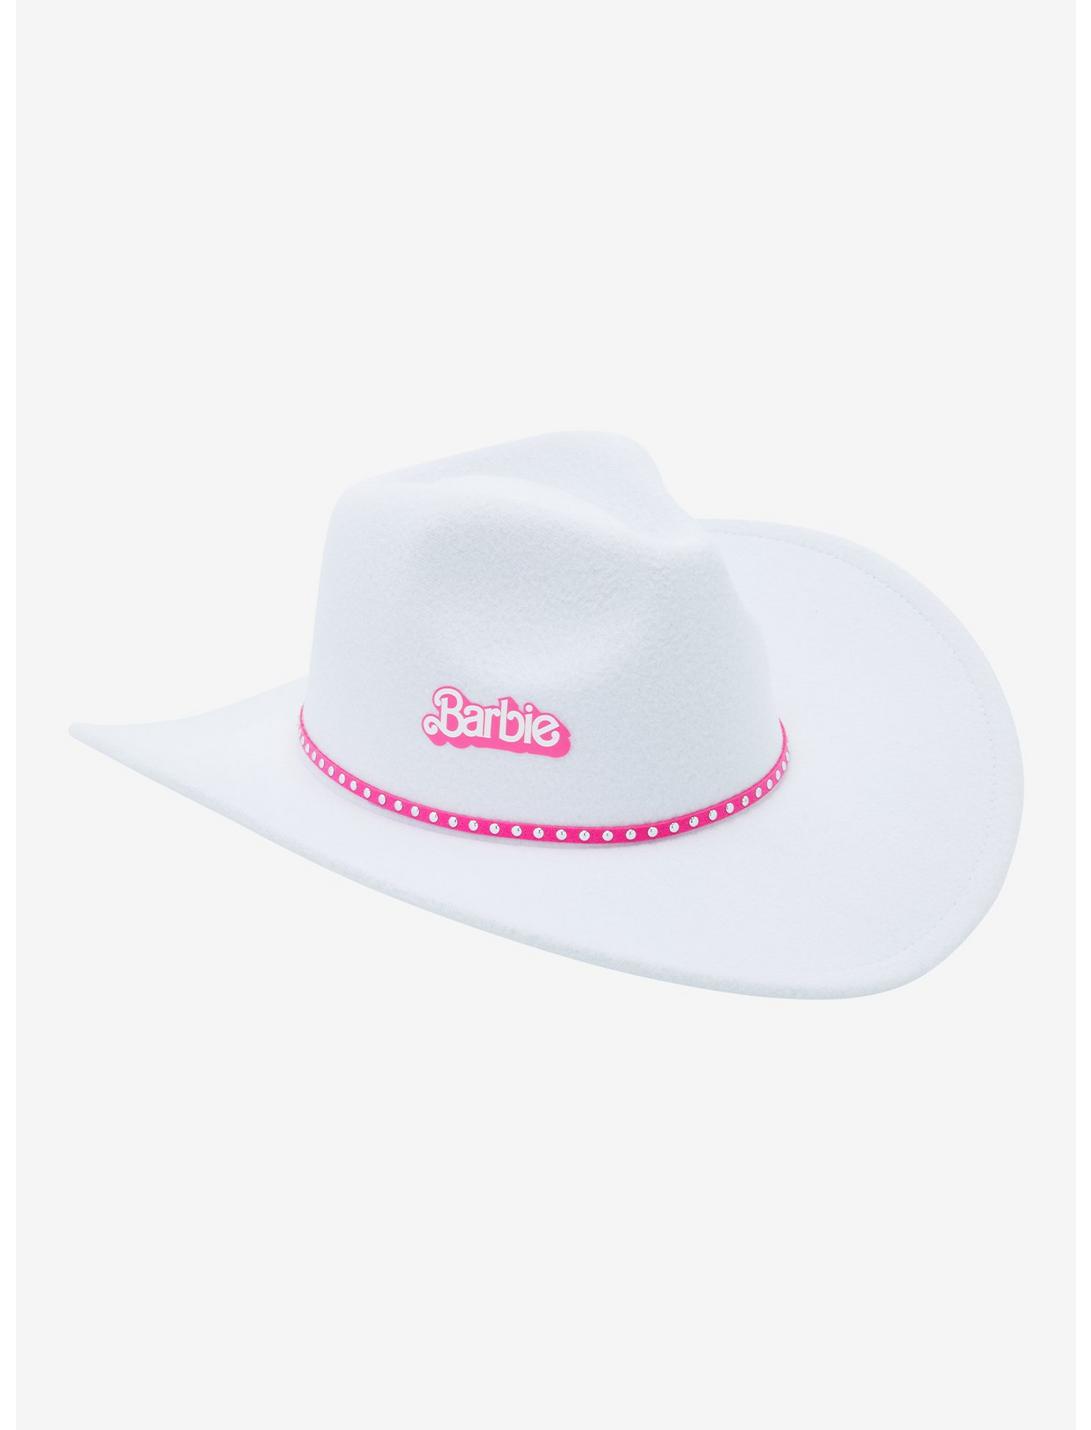 barbie cowgirl hat